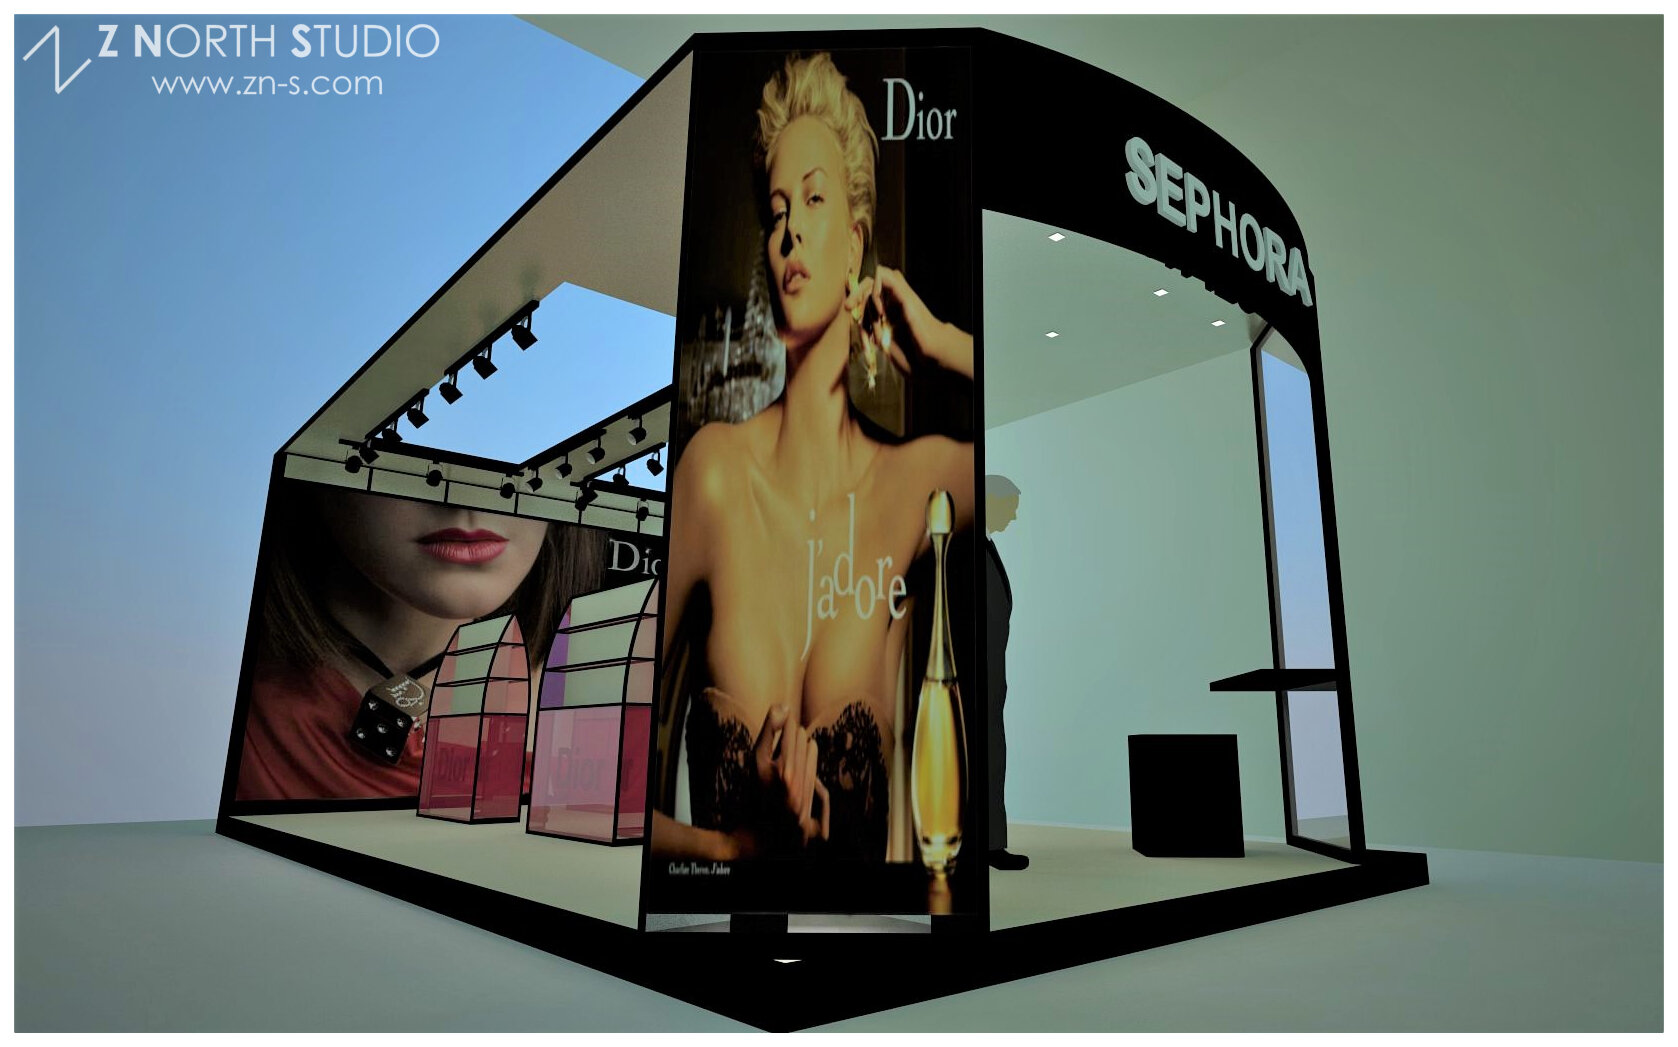 SEPHORA - www.sephora.com - Interior design by Z North Studio (1).jpg